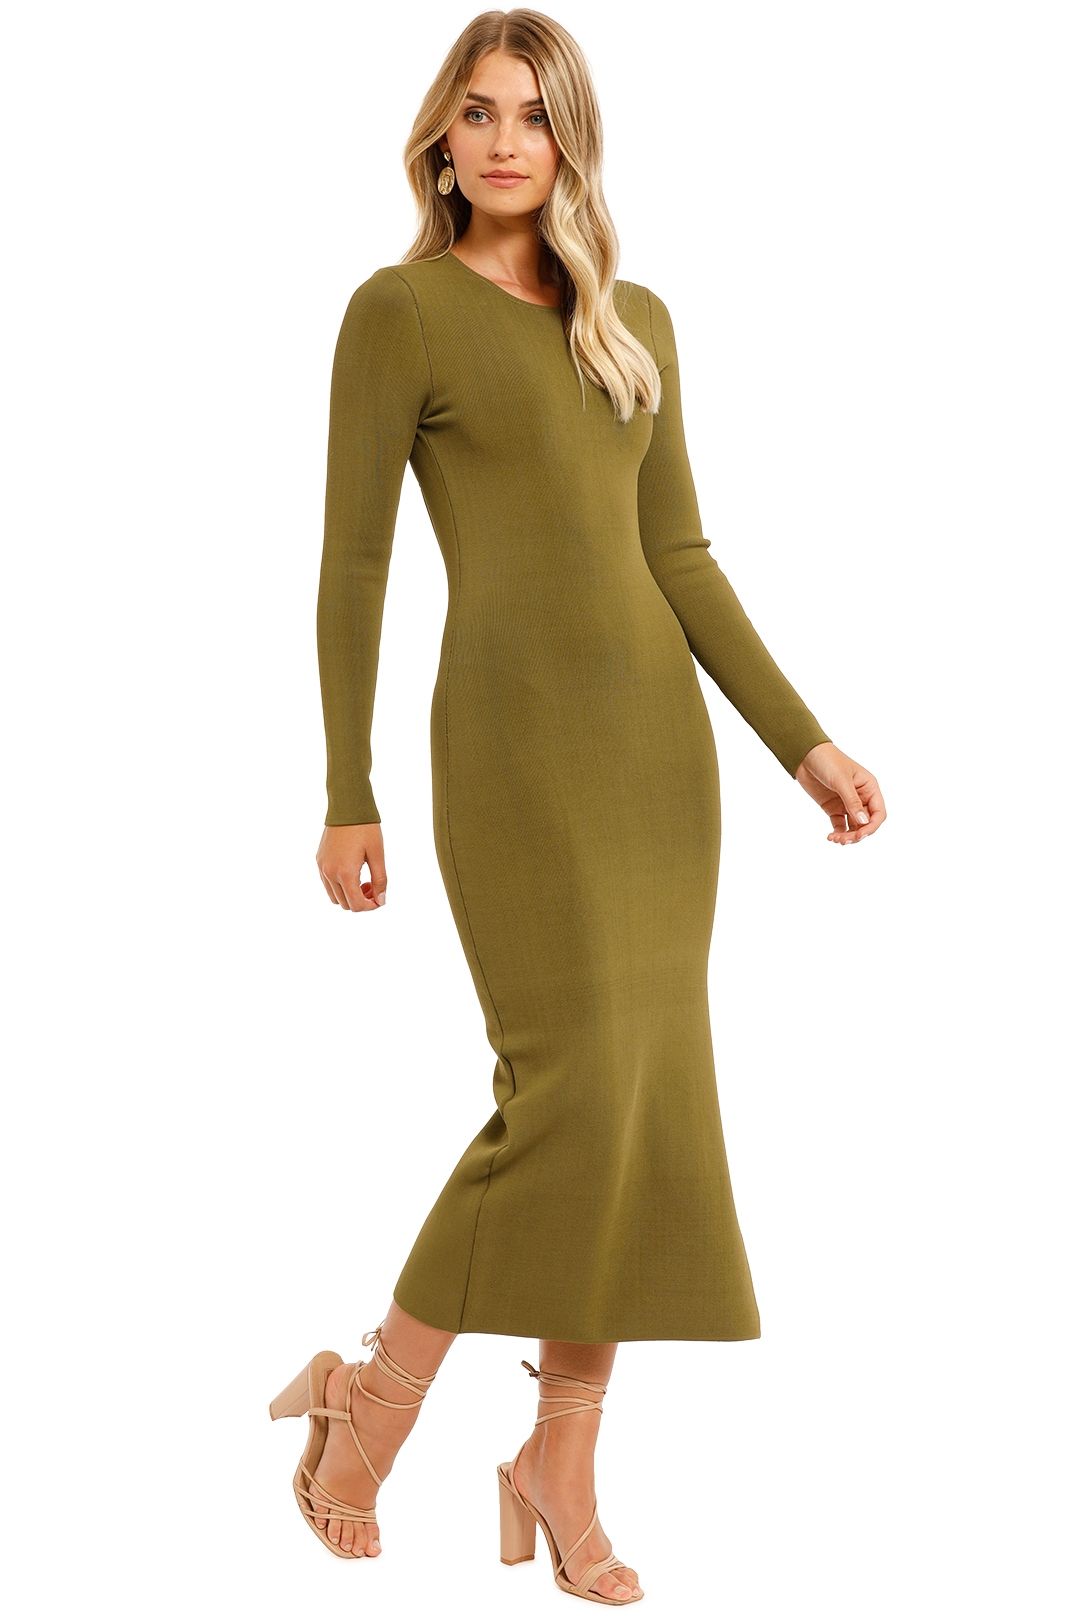 Shona Joy Long Sleeve Backless Midi Dress Olive Green